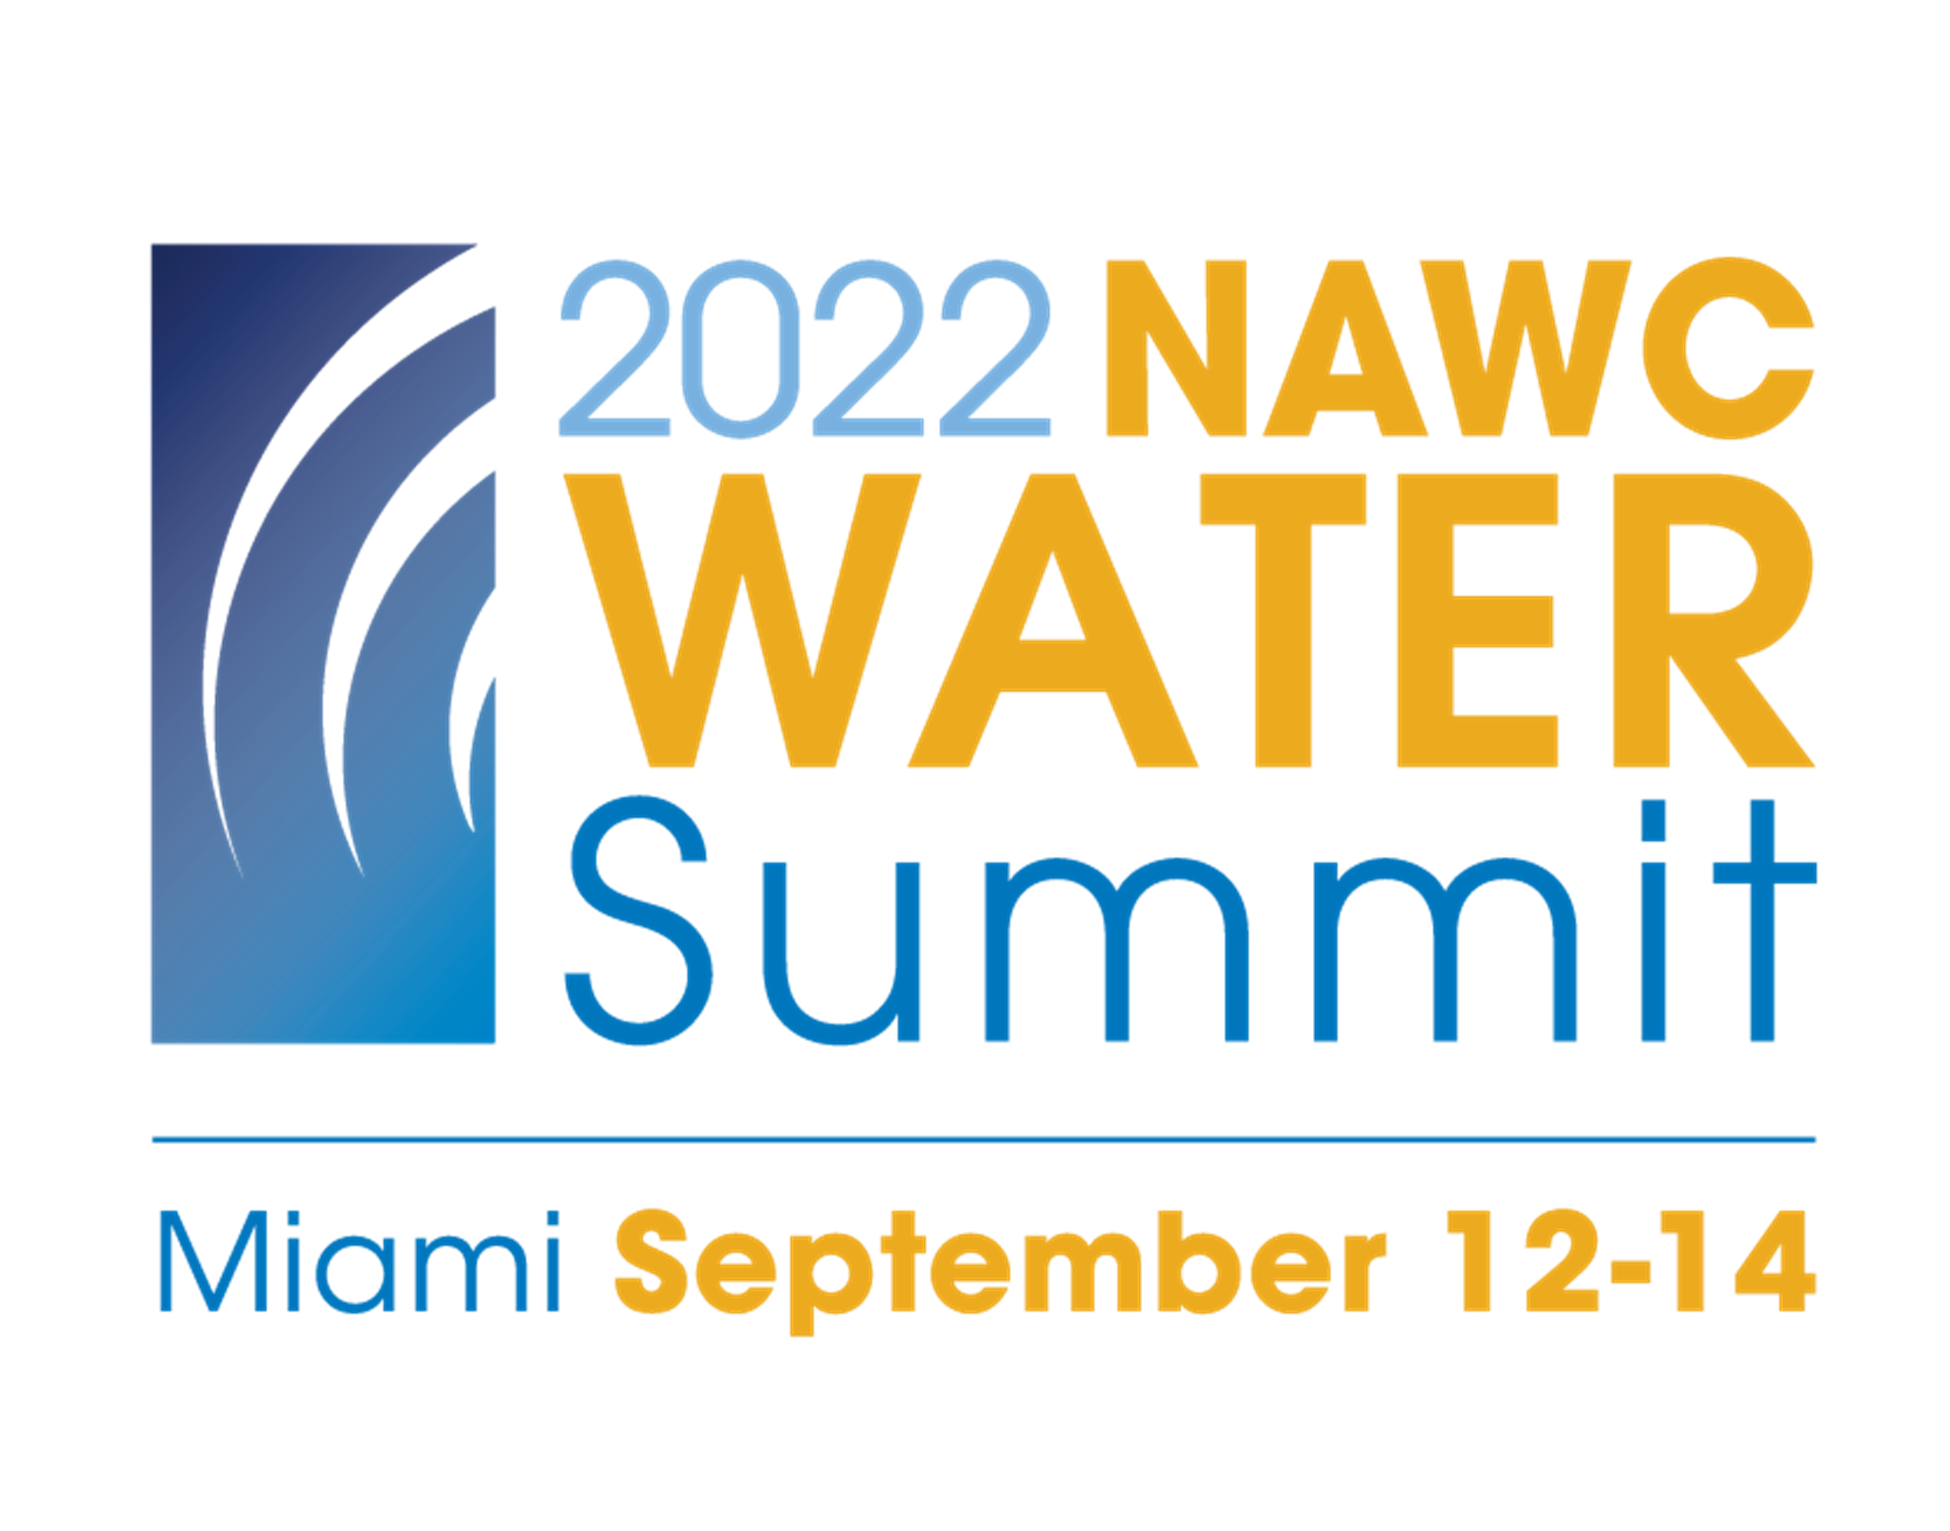 NAWC Water Summit 2022